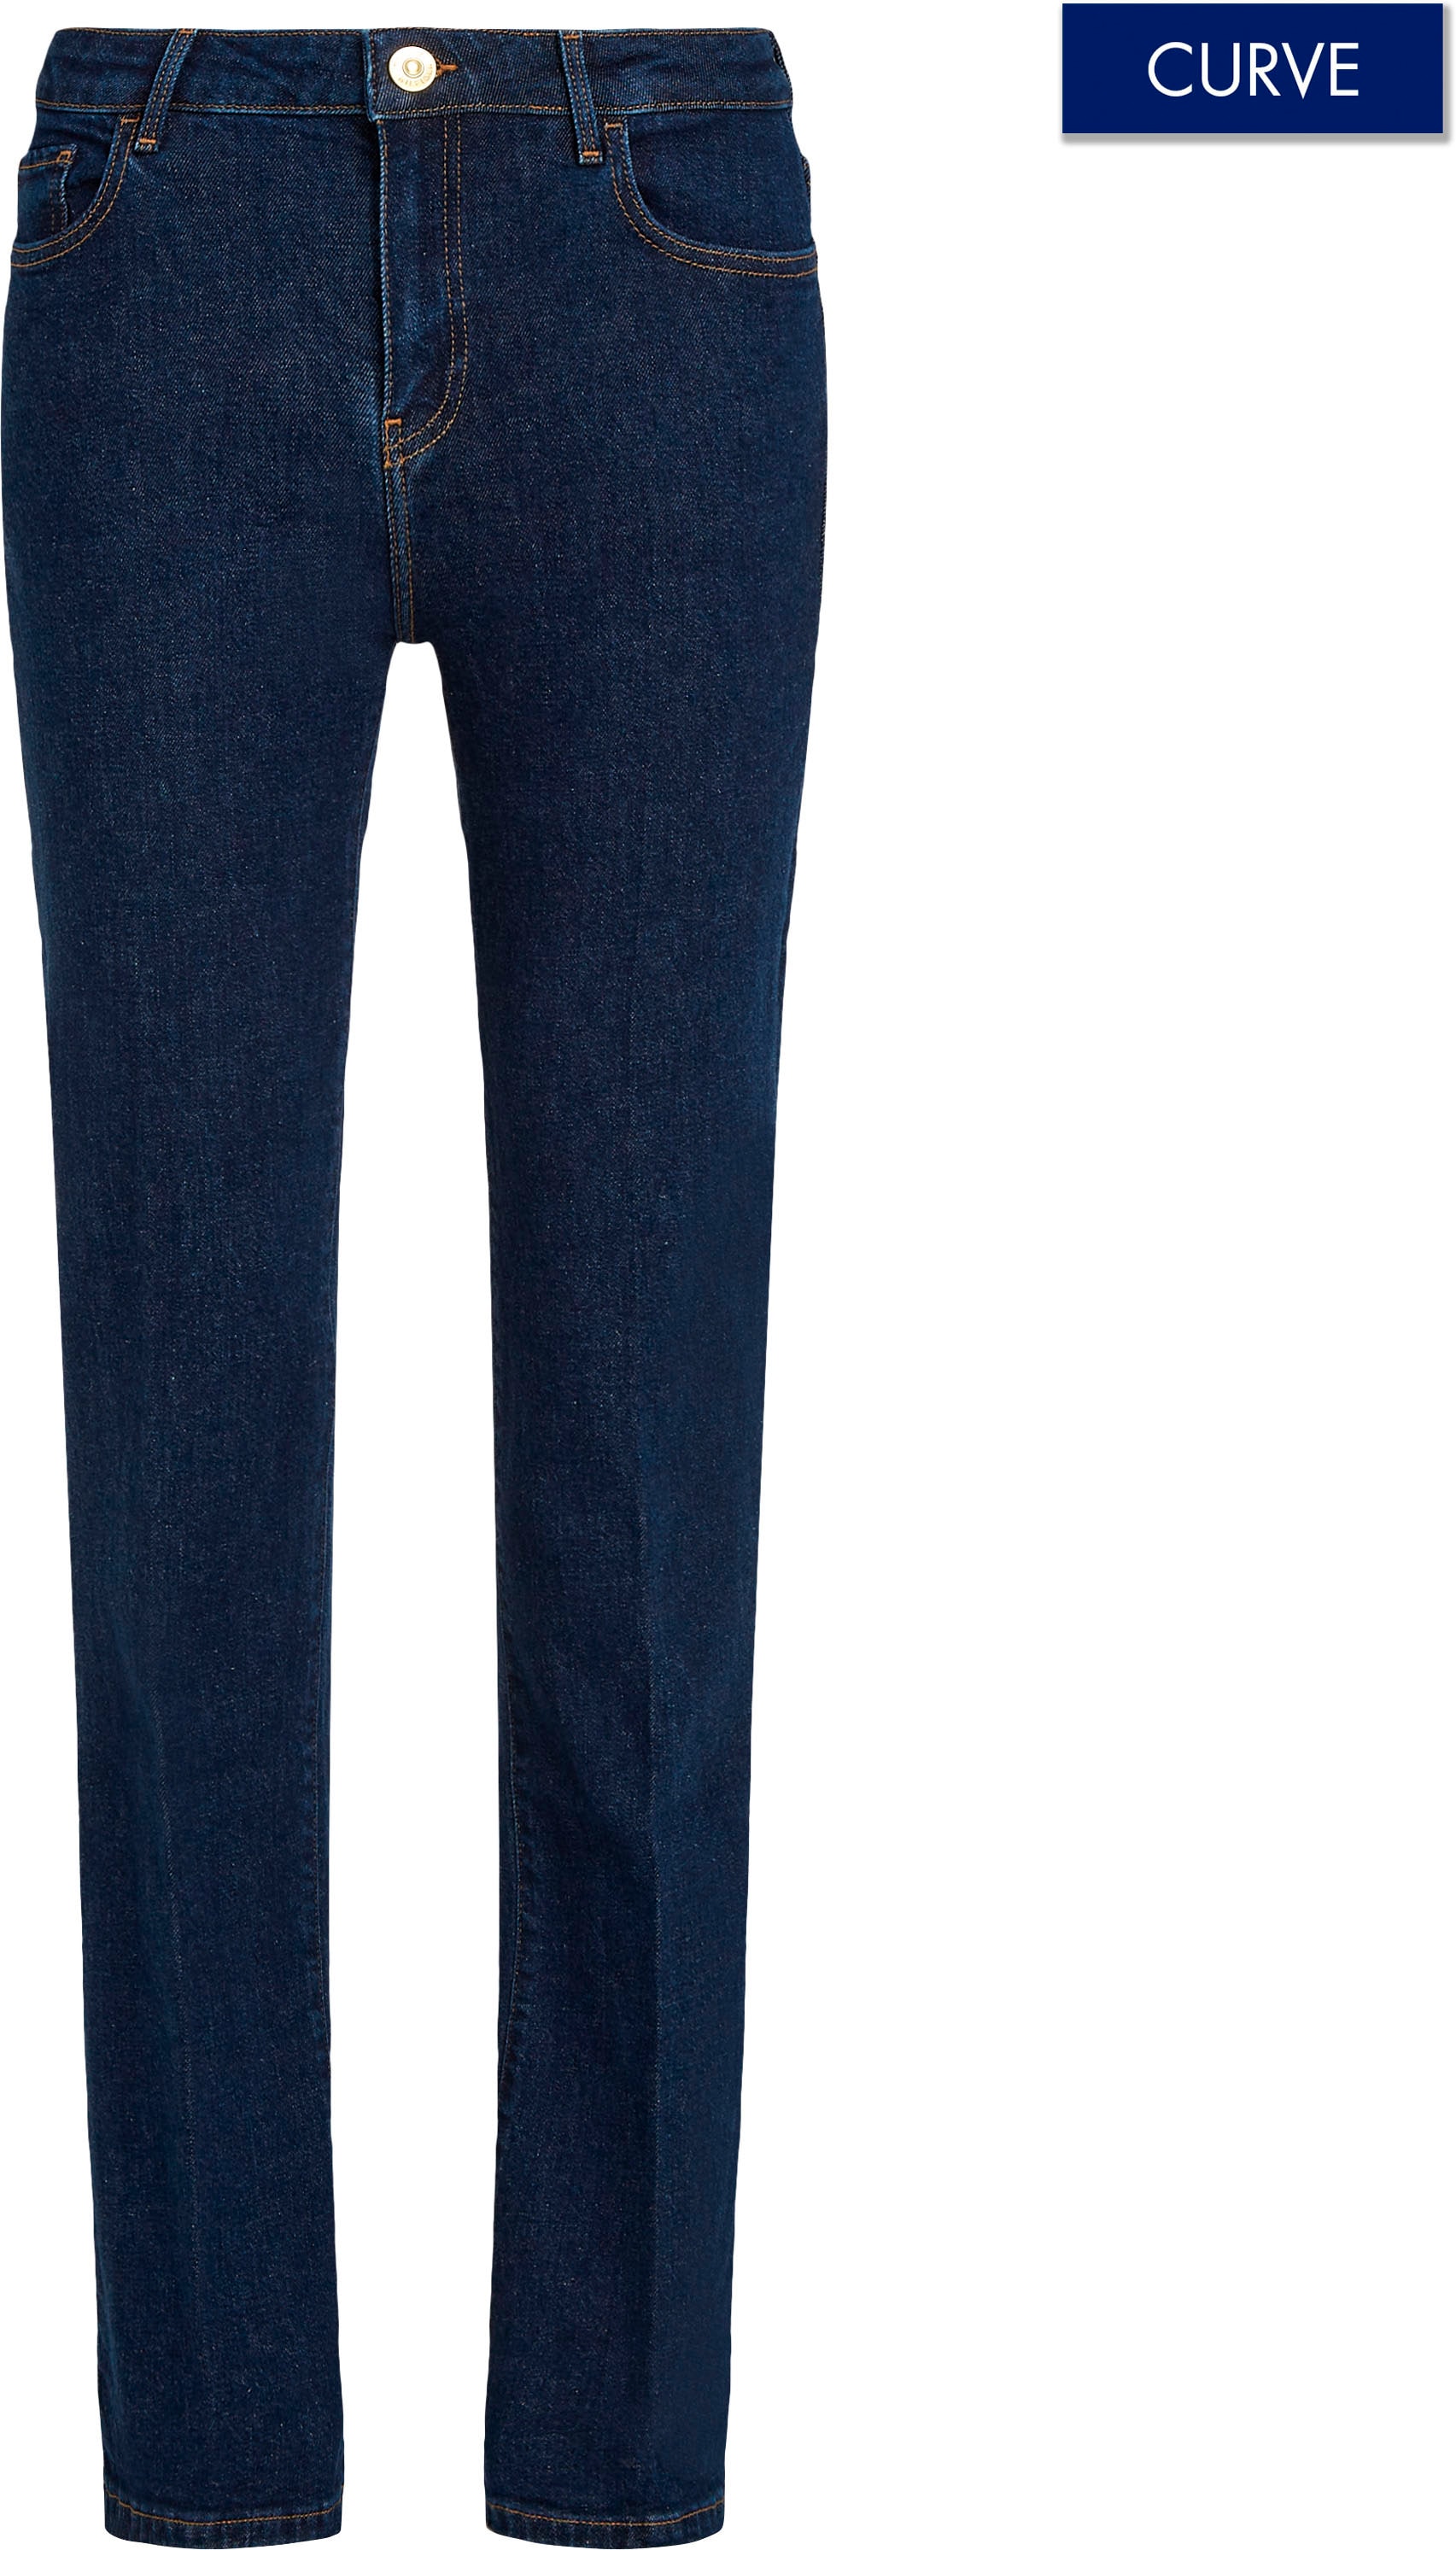 Tommy Hilfiger Curve Bootcut-Jeans »CRV BOOTCUT RW CLER«, Grosse Grössen, Stoned Washed Optik